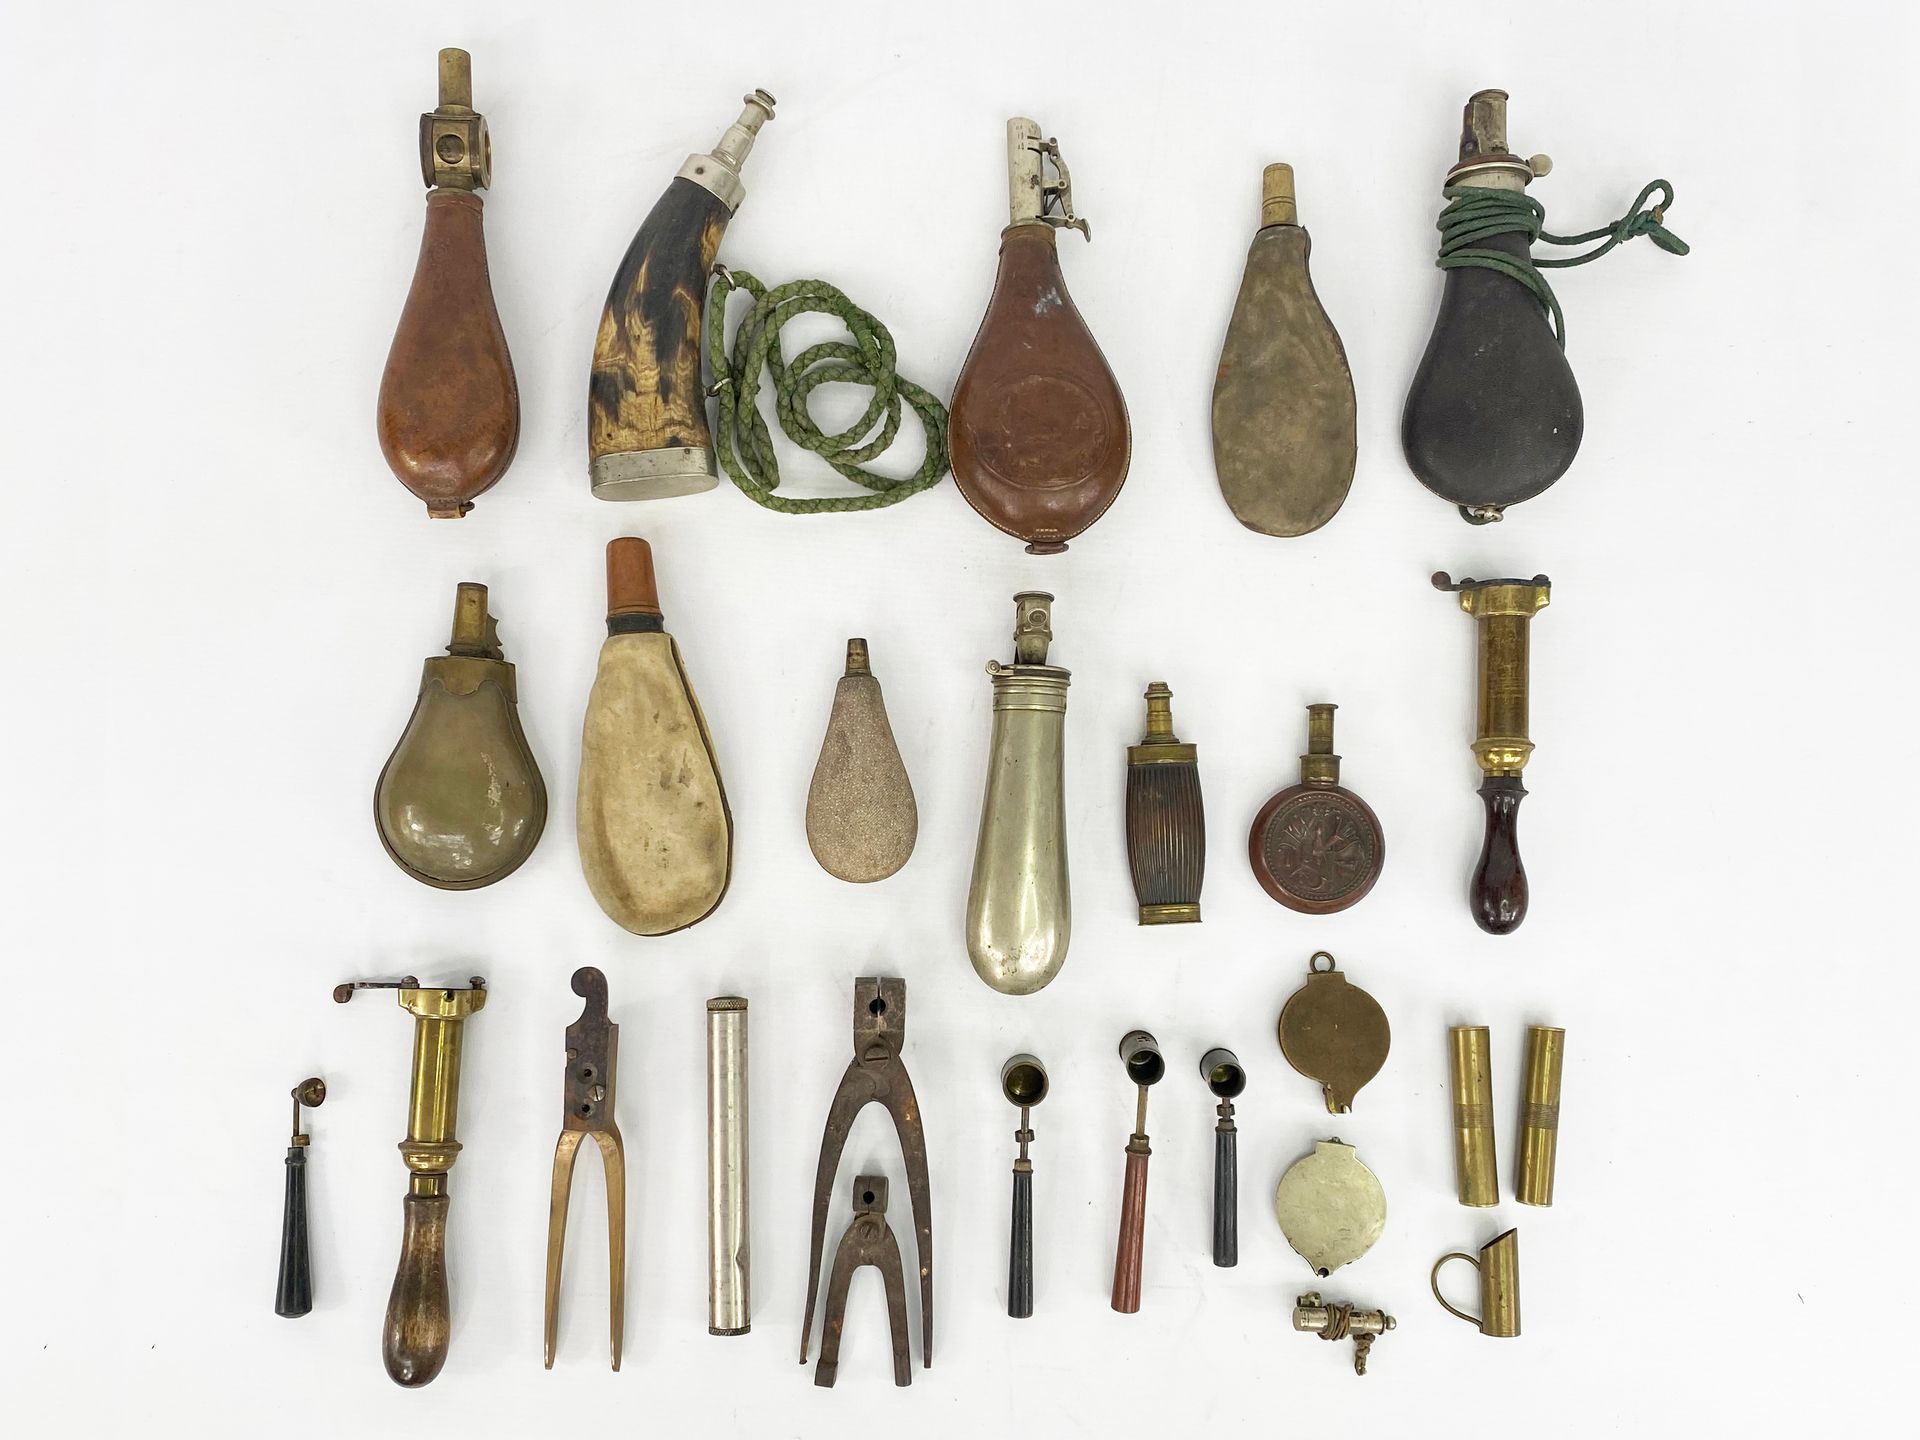 Null 一套用于火器的火药瓶和工具。

19世纪晚期和20世纪